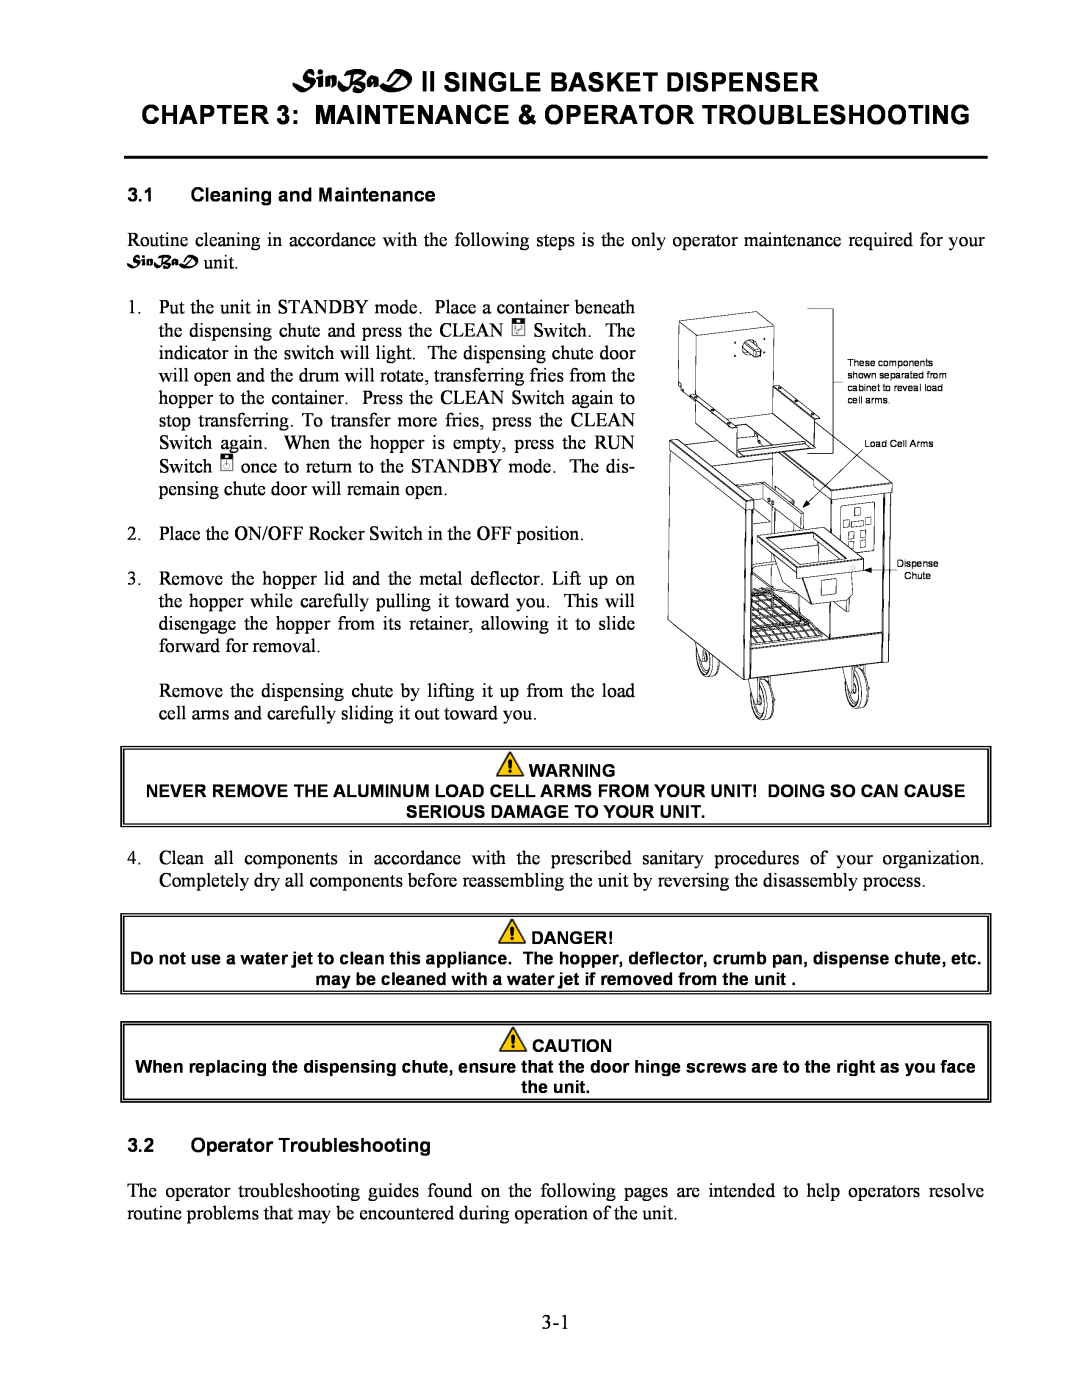 Frymaster Maintenance & Operator Troubleshooting, SinBaD II SINGLE BASKET DISPENSER, Cleaning and Maintenance 